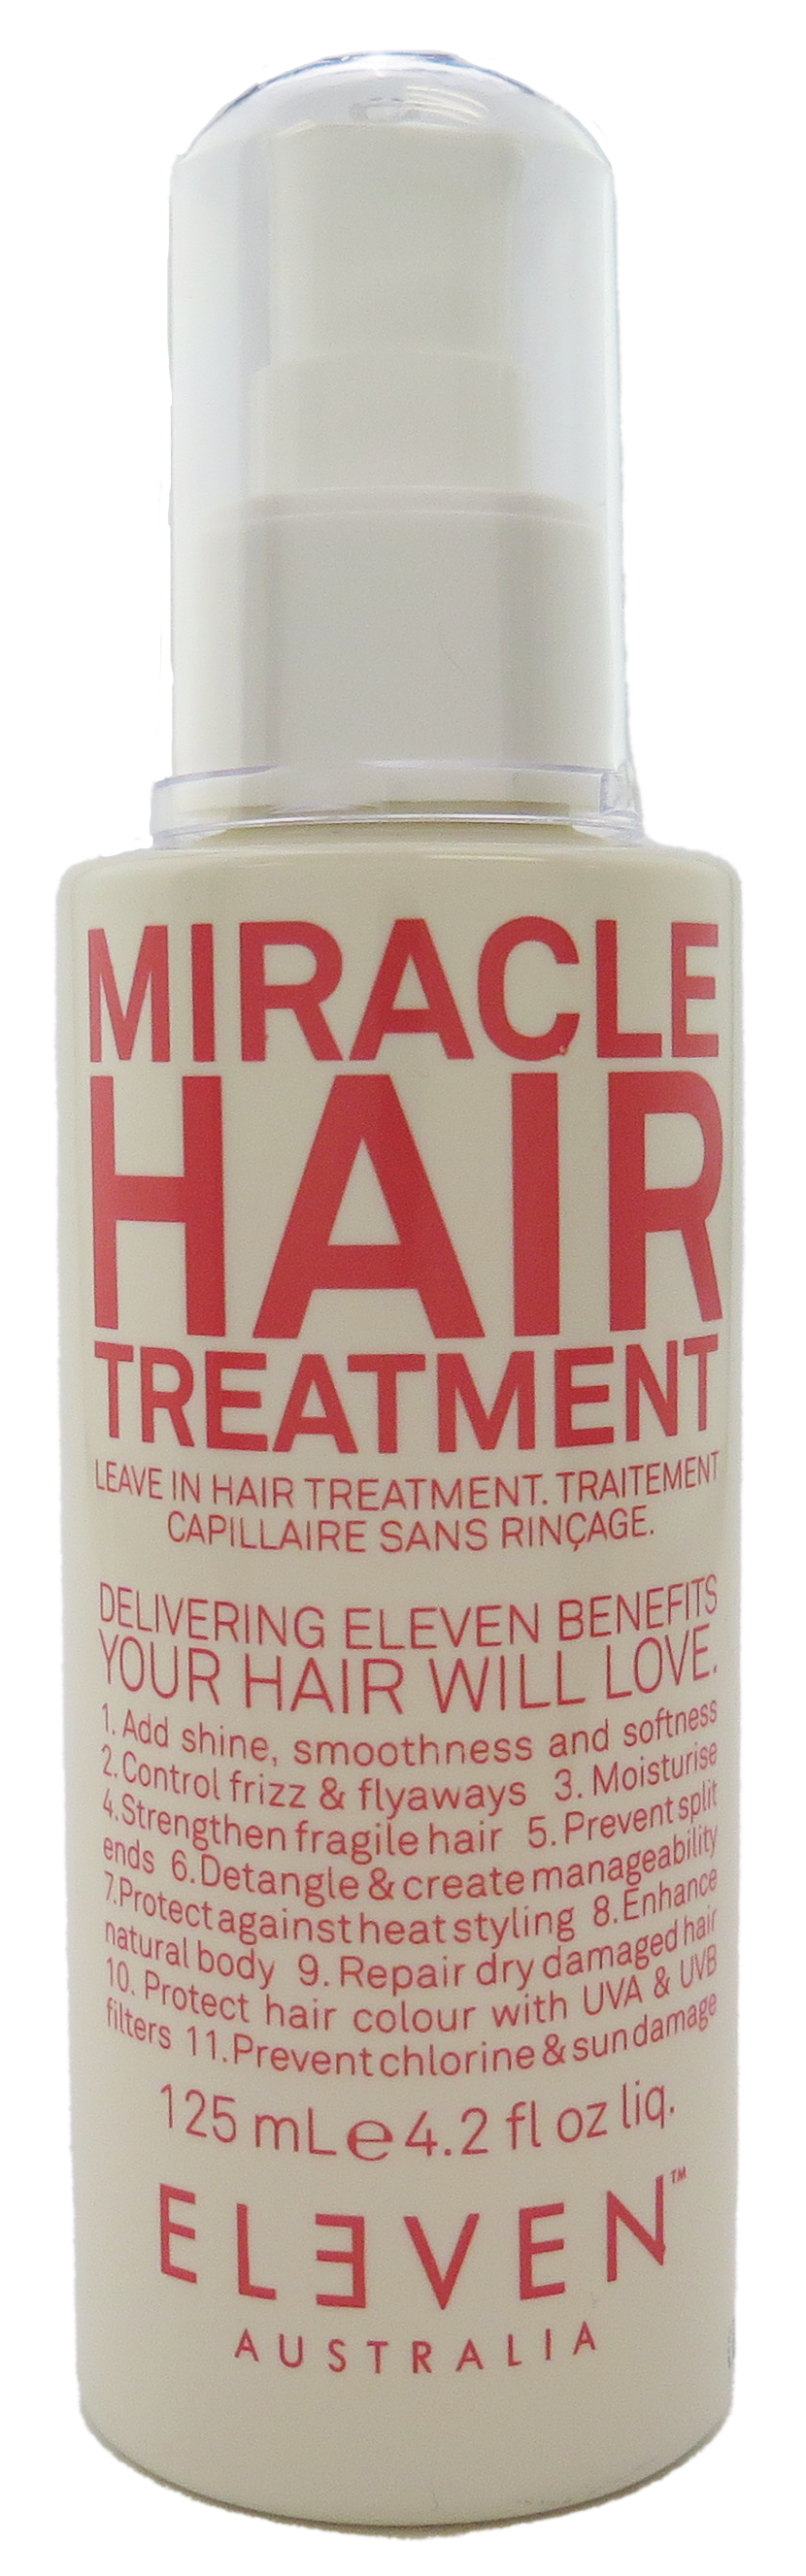 Eleven Australia Miracle Hair Treatment 4.2 fl oz 